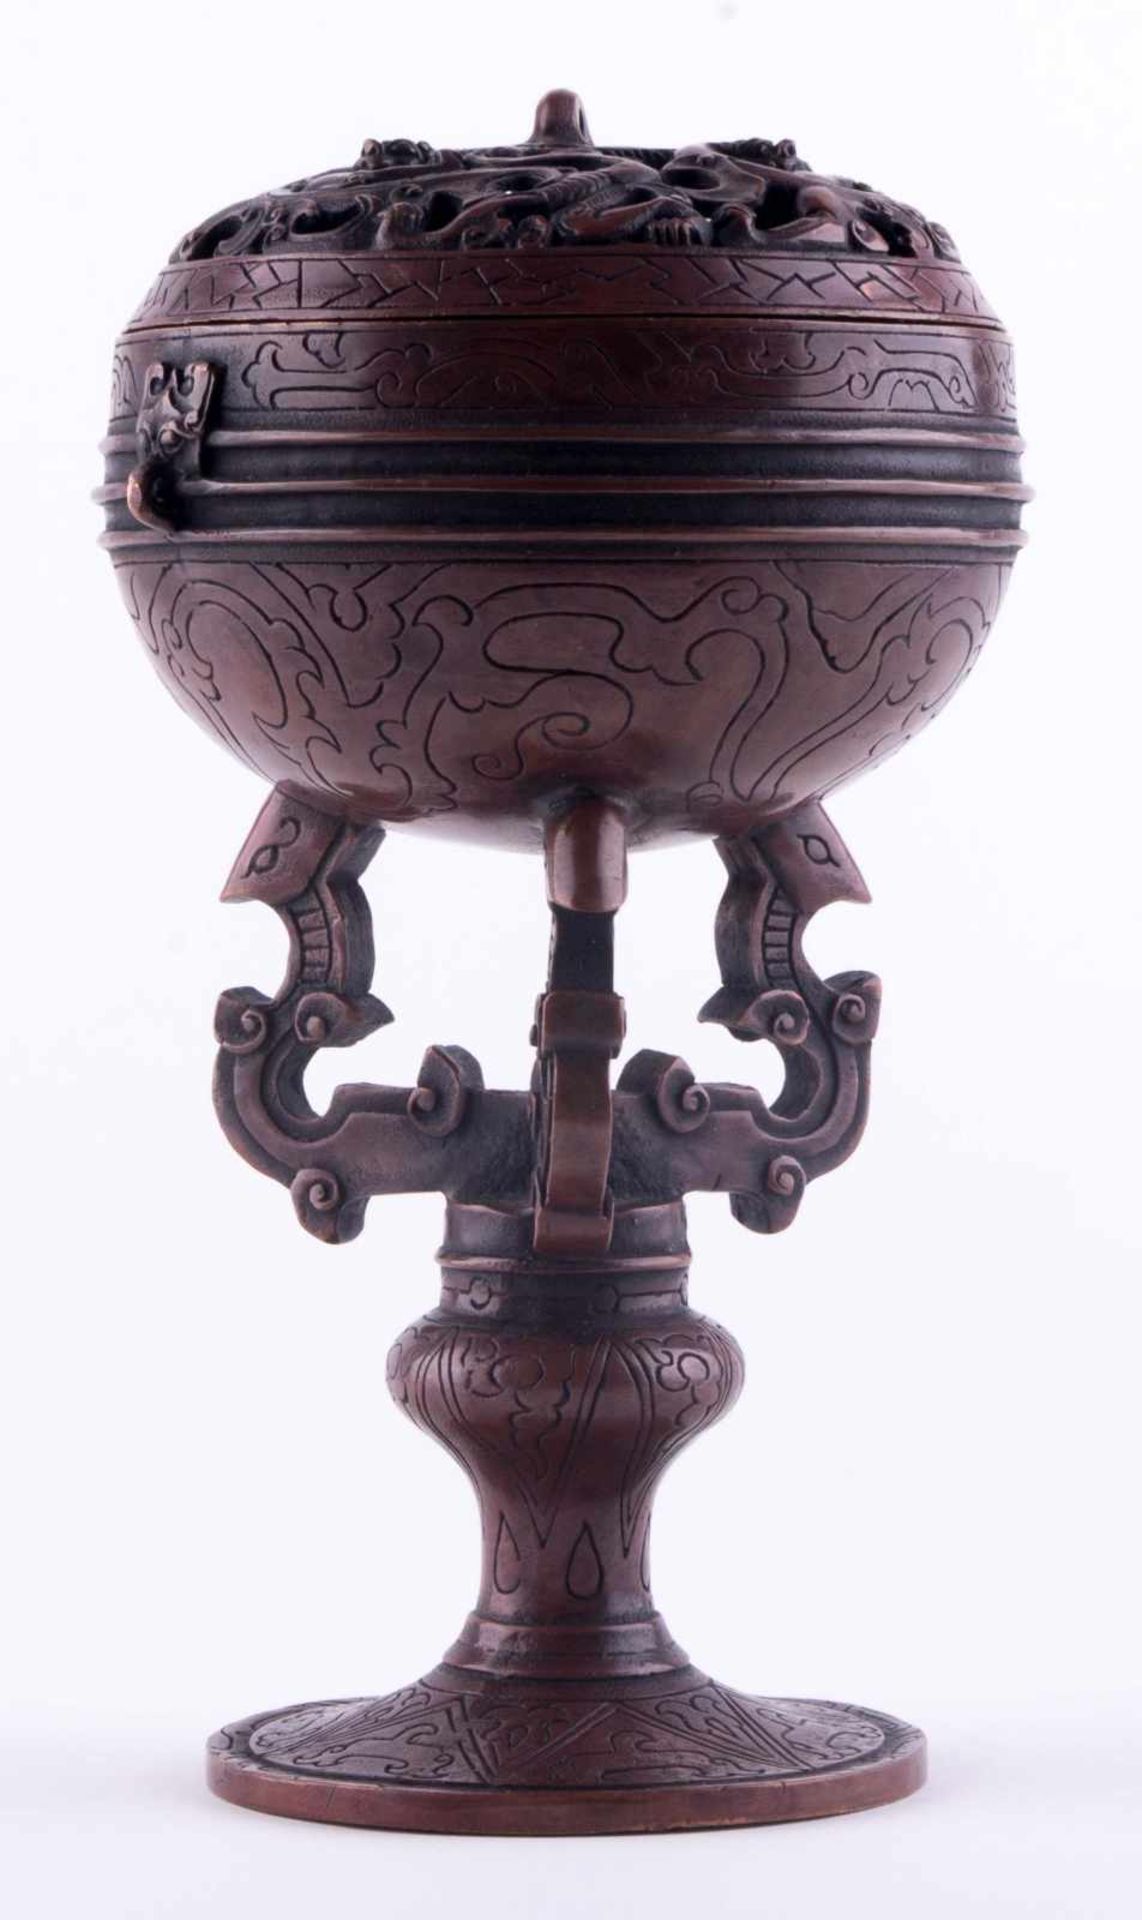 Weihrauchbrenner China 19. Jhd. / Incense burner, China 19th century Bronze, H: 22 cm